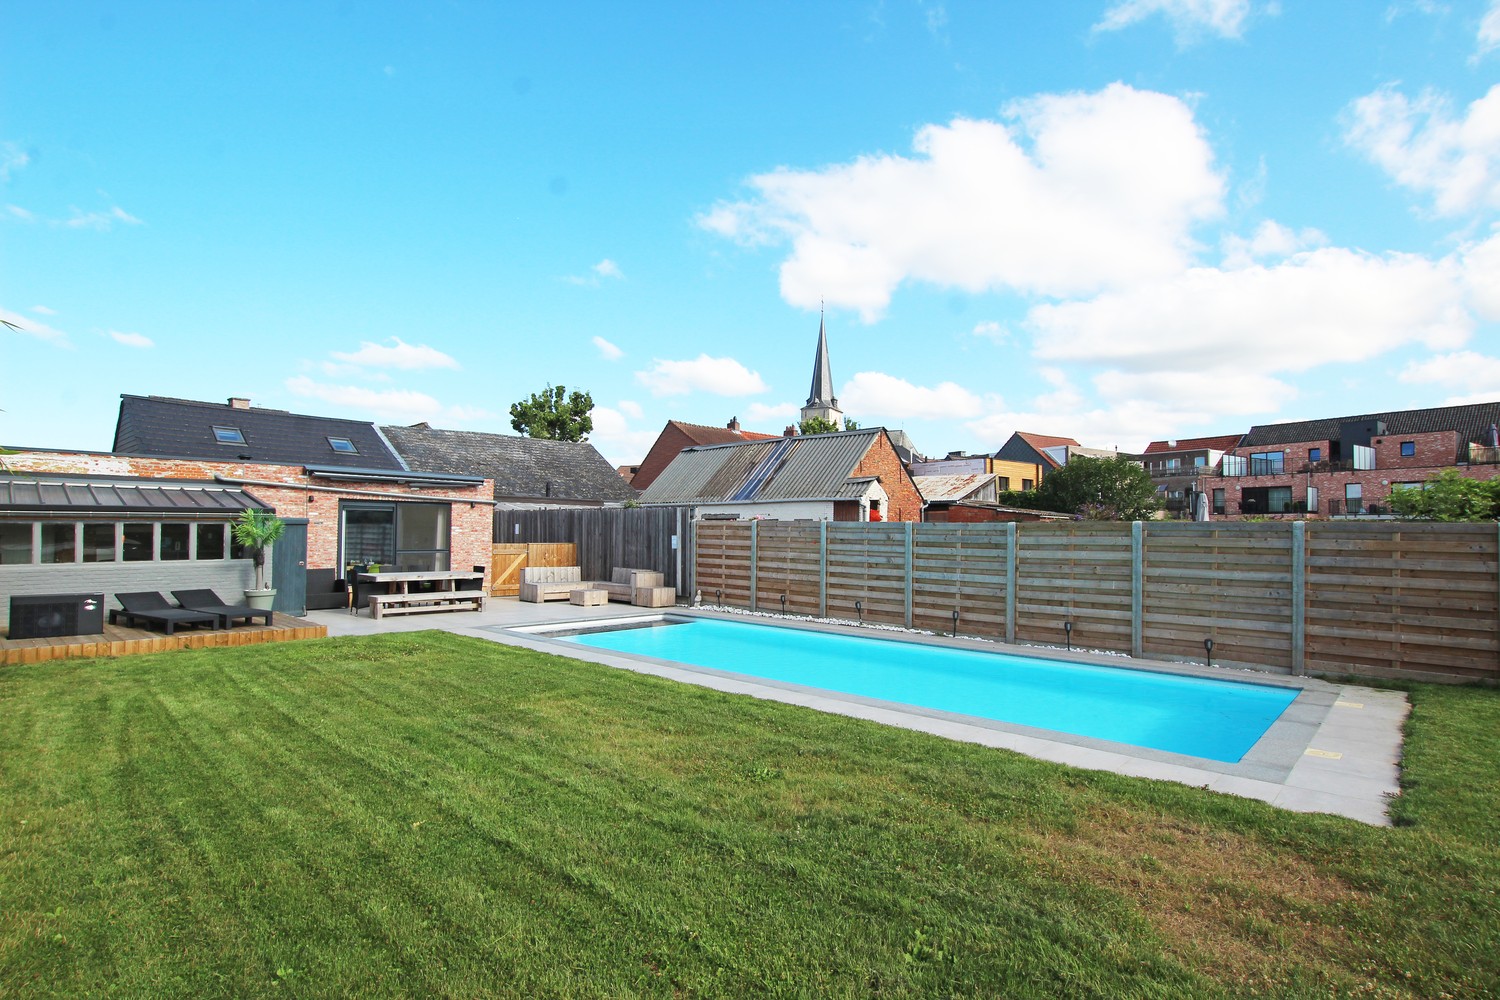 Verrassend ruime woning met riante tuin (774m²) en verwarmd zwembad in hartje Broechem! afbeelding 1